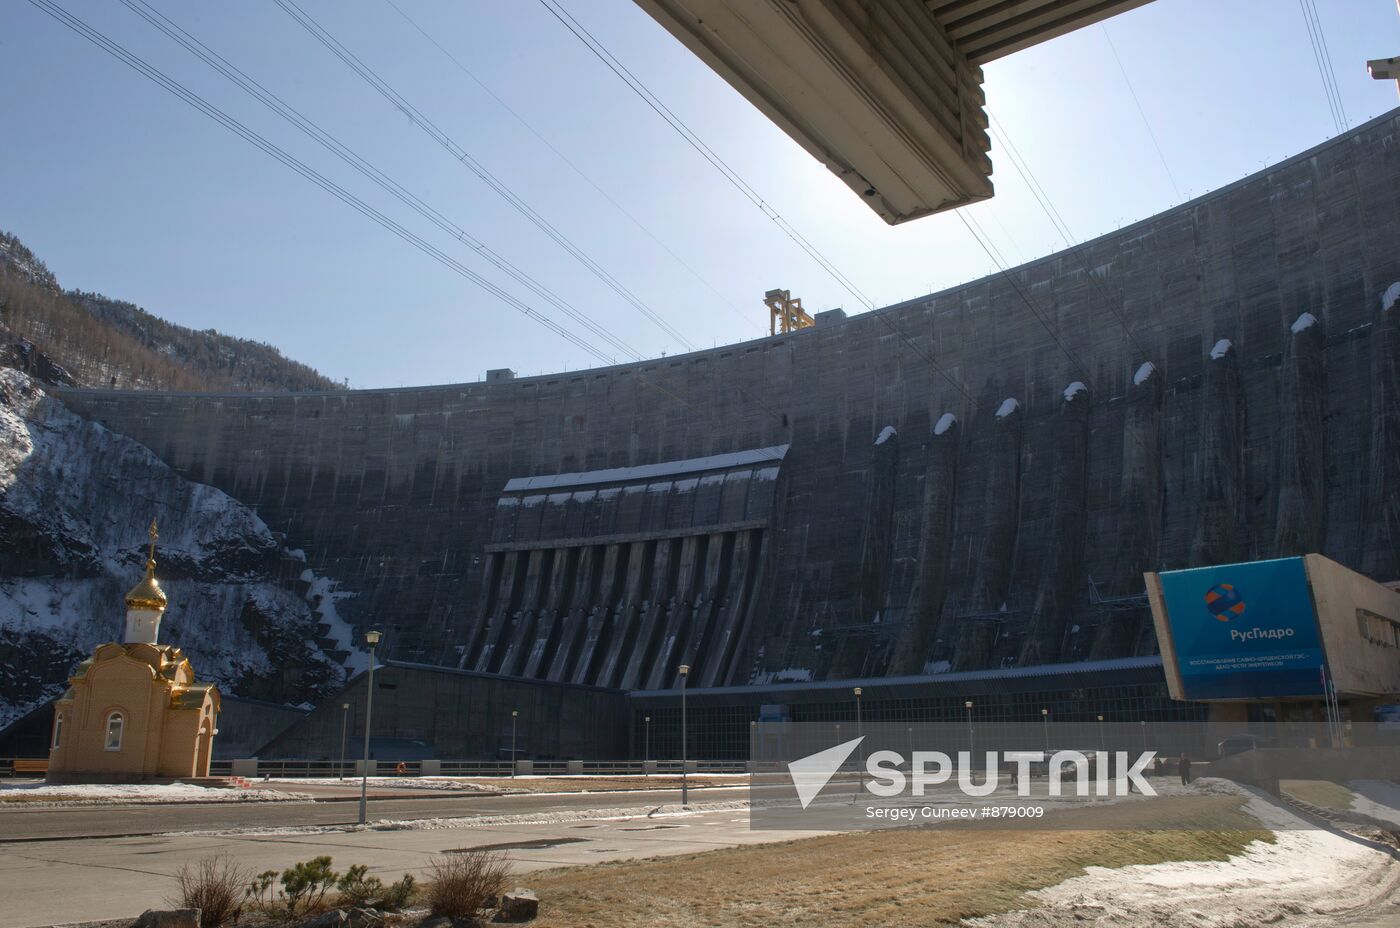 Sayano-Shushenskaya Hydroelectric Power Plant's dam